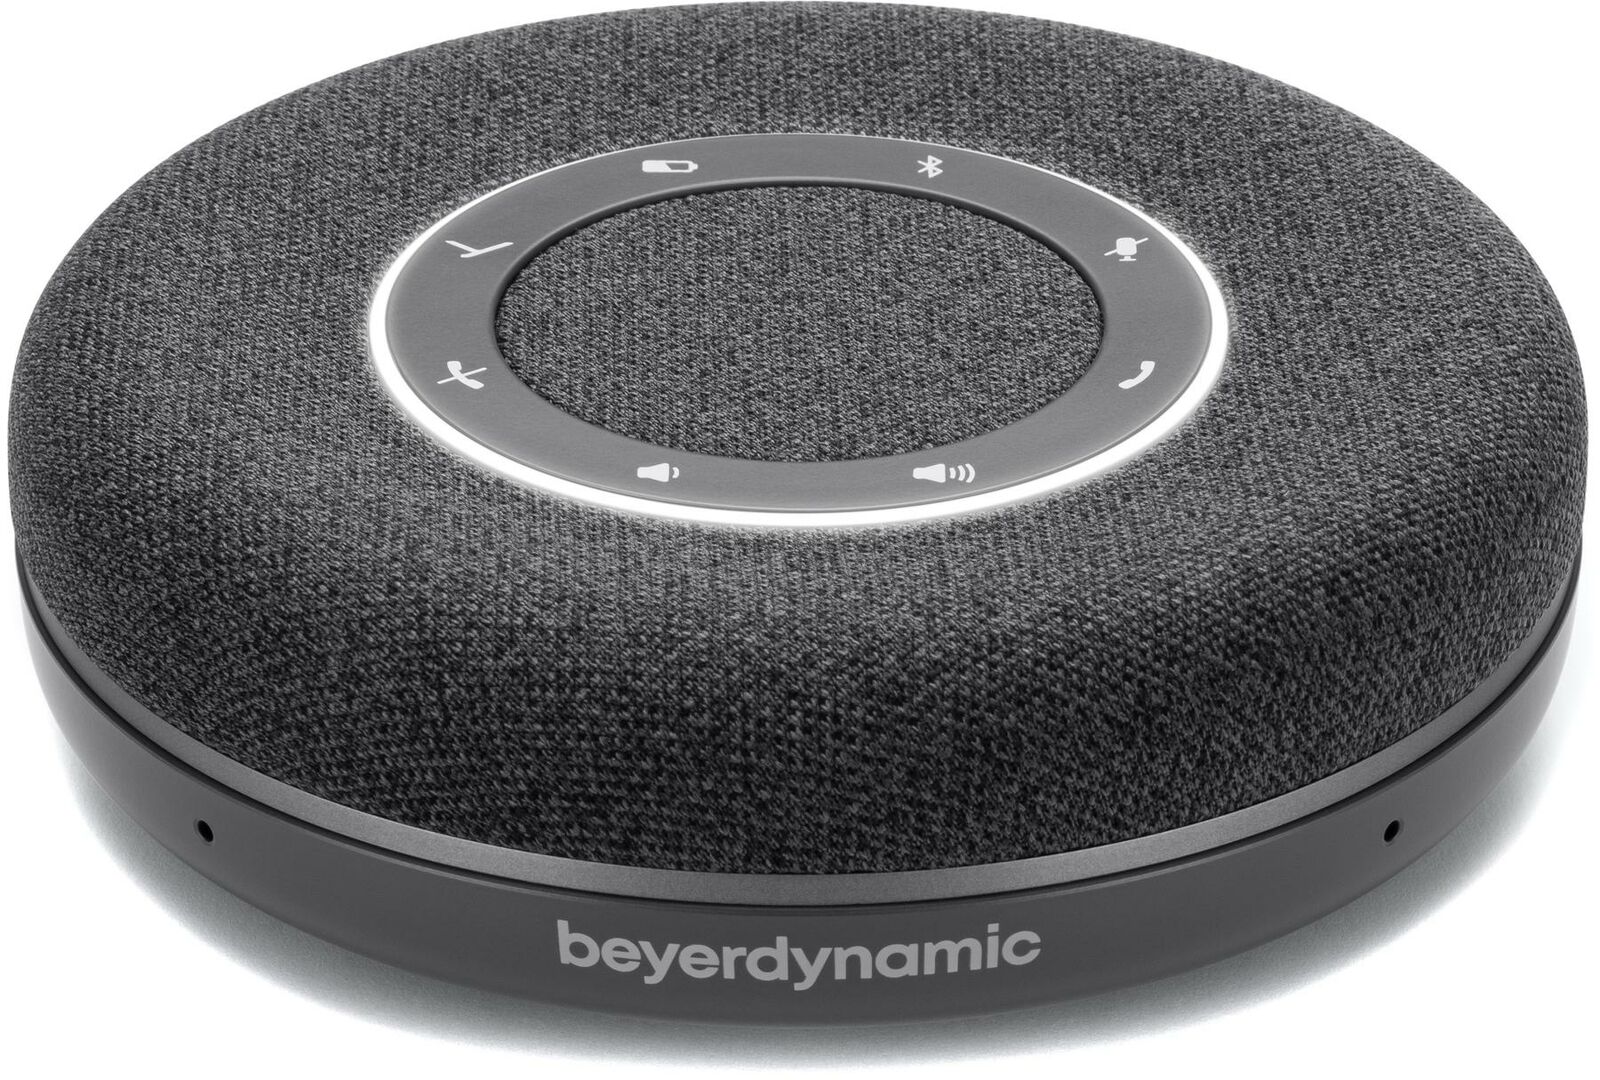 2-Beyerdynamic Speakers Grey and Charcoal + 2-Mini Smart Plug + 2-LCD Cleaners